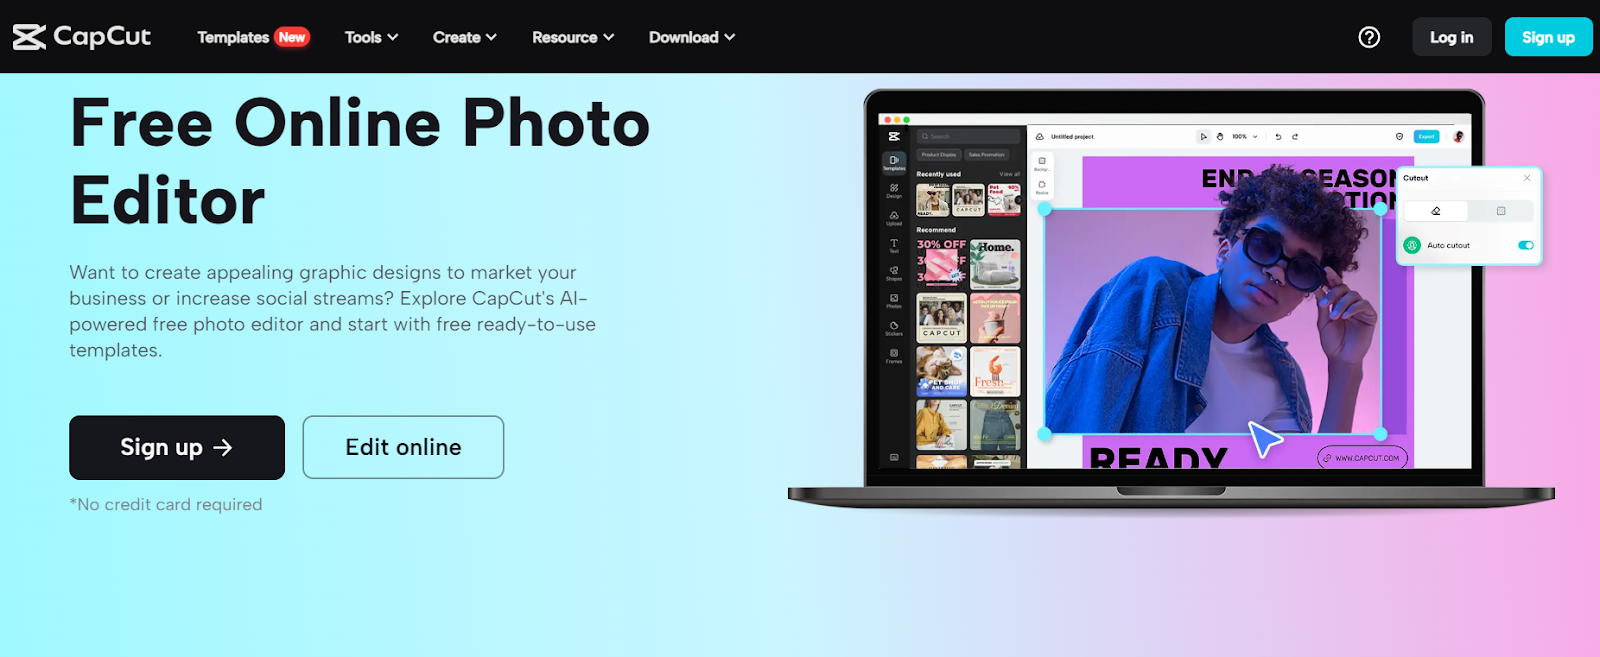 Top photo editing tools on CapCut 